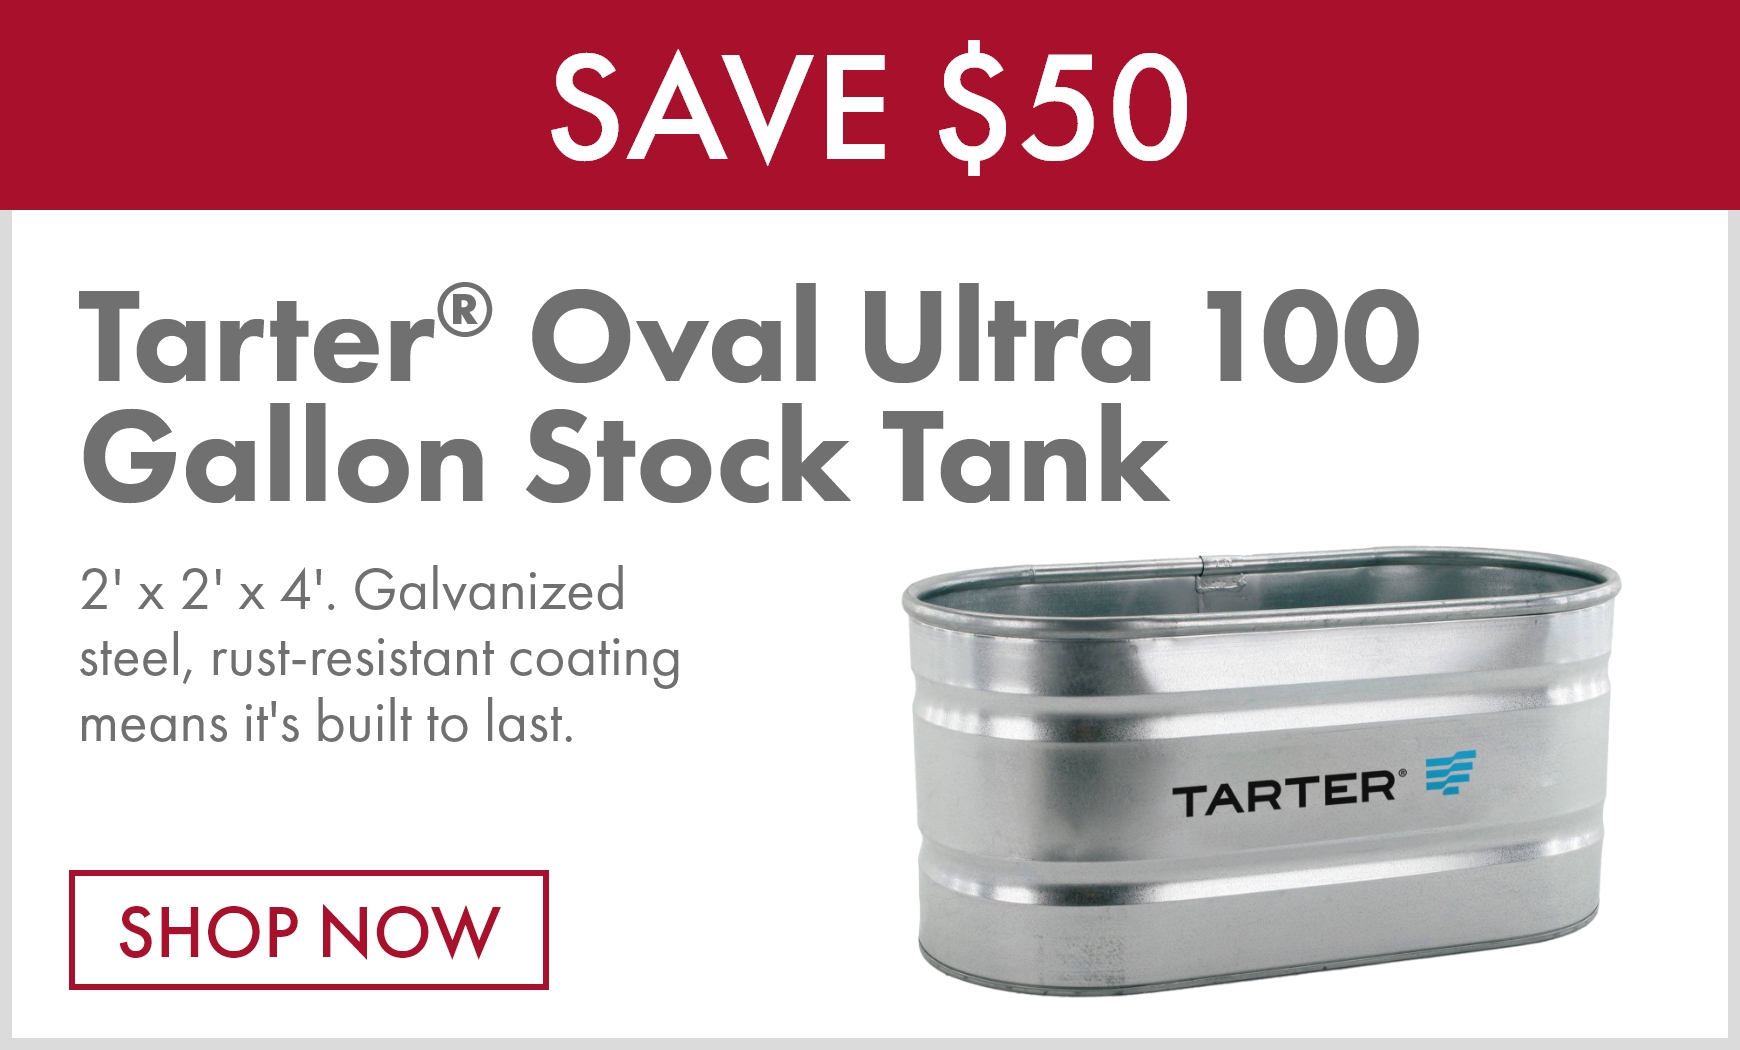 Tarter® Oval Ultra 100 Gallon Stock Tank